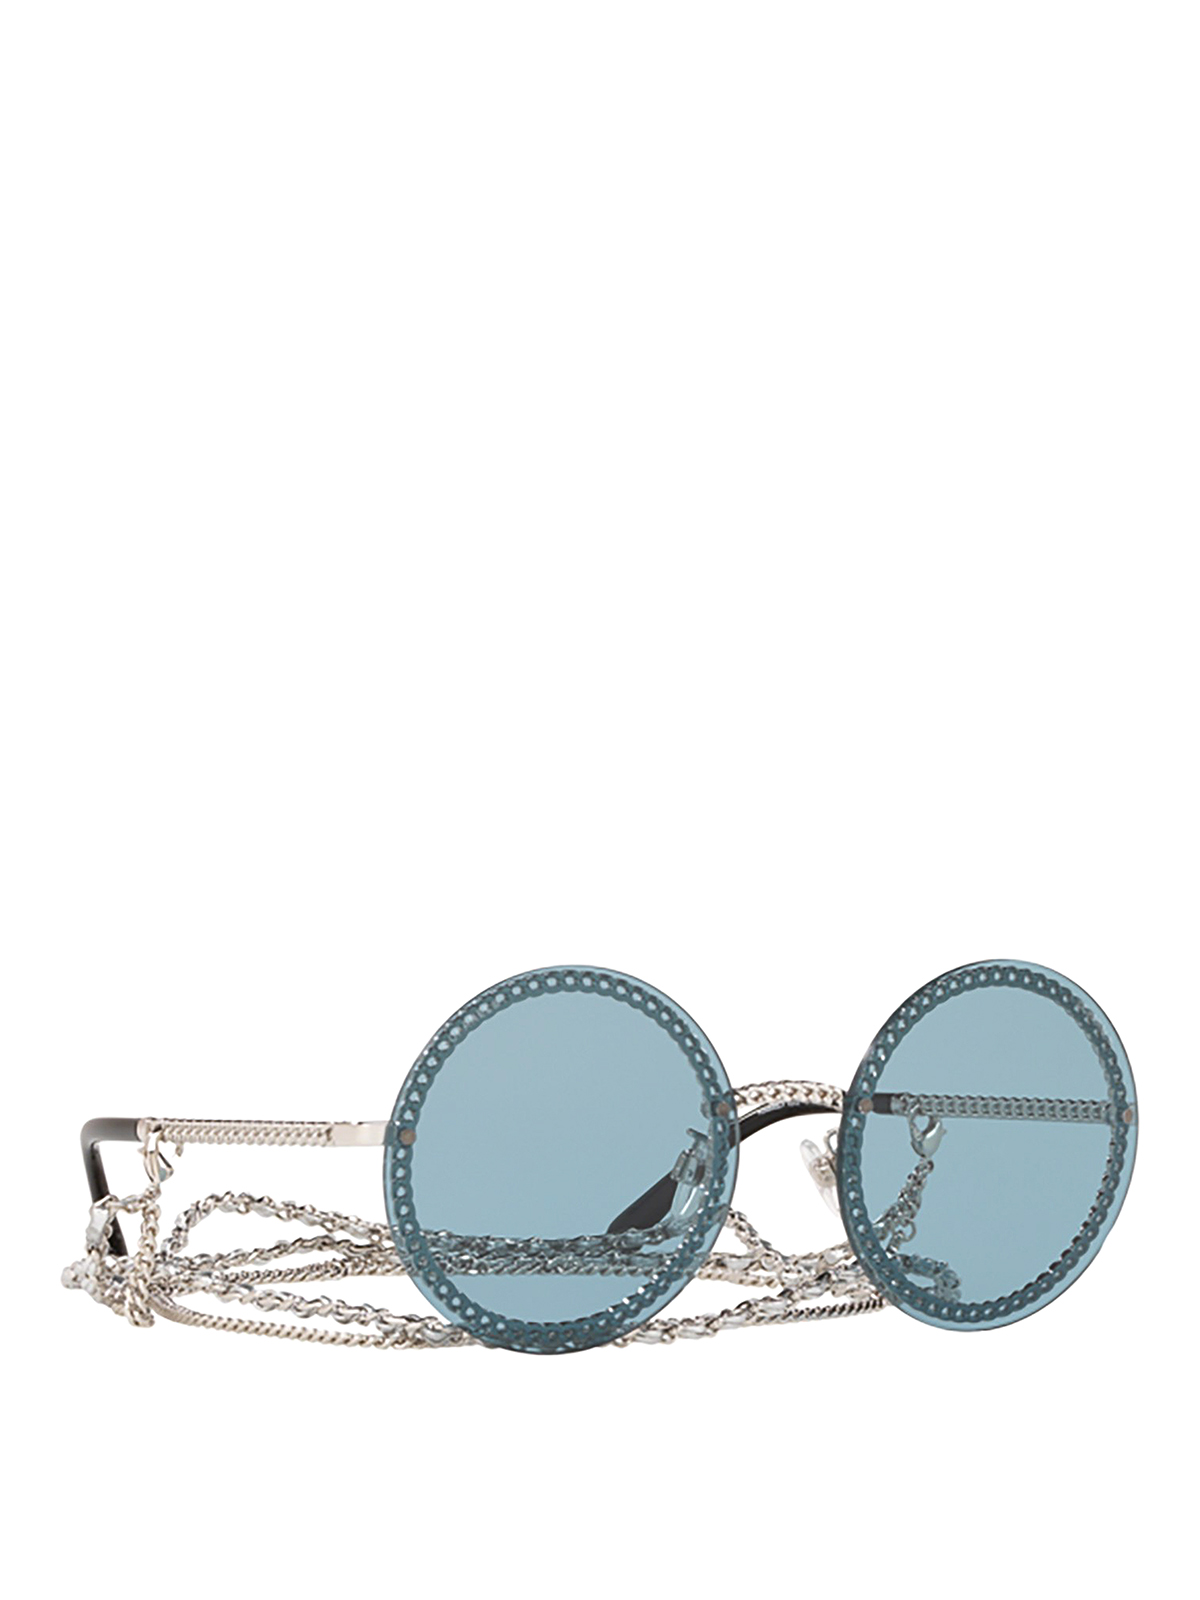 Chanel Blue Glasses